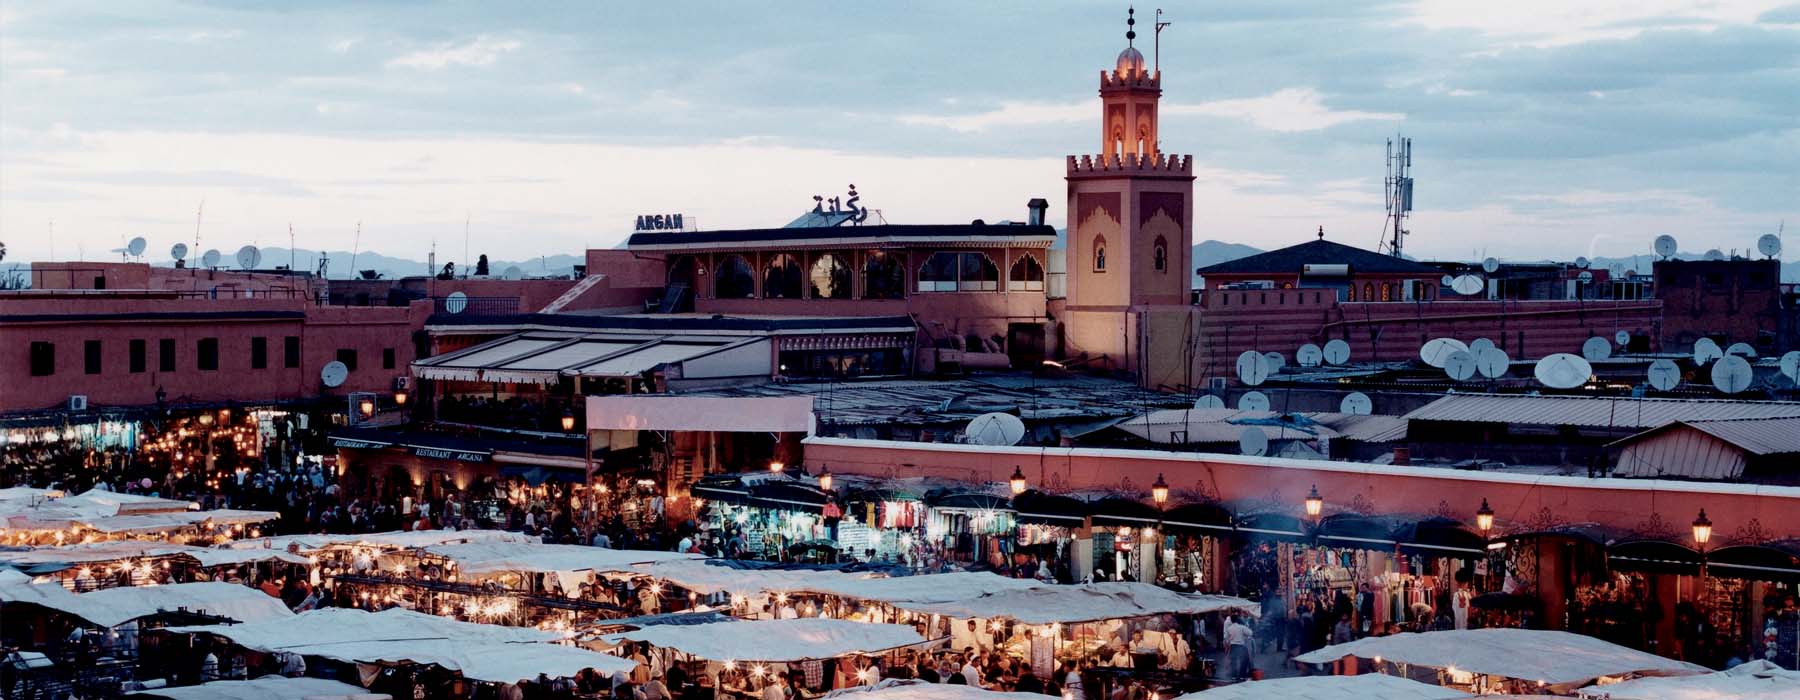 Noël & Réveillons Maroc